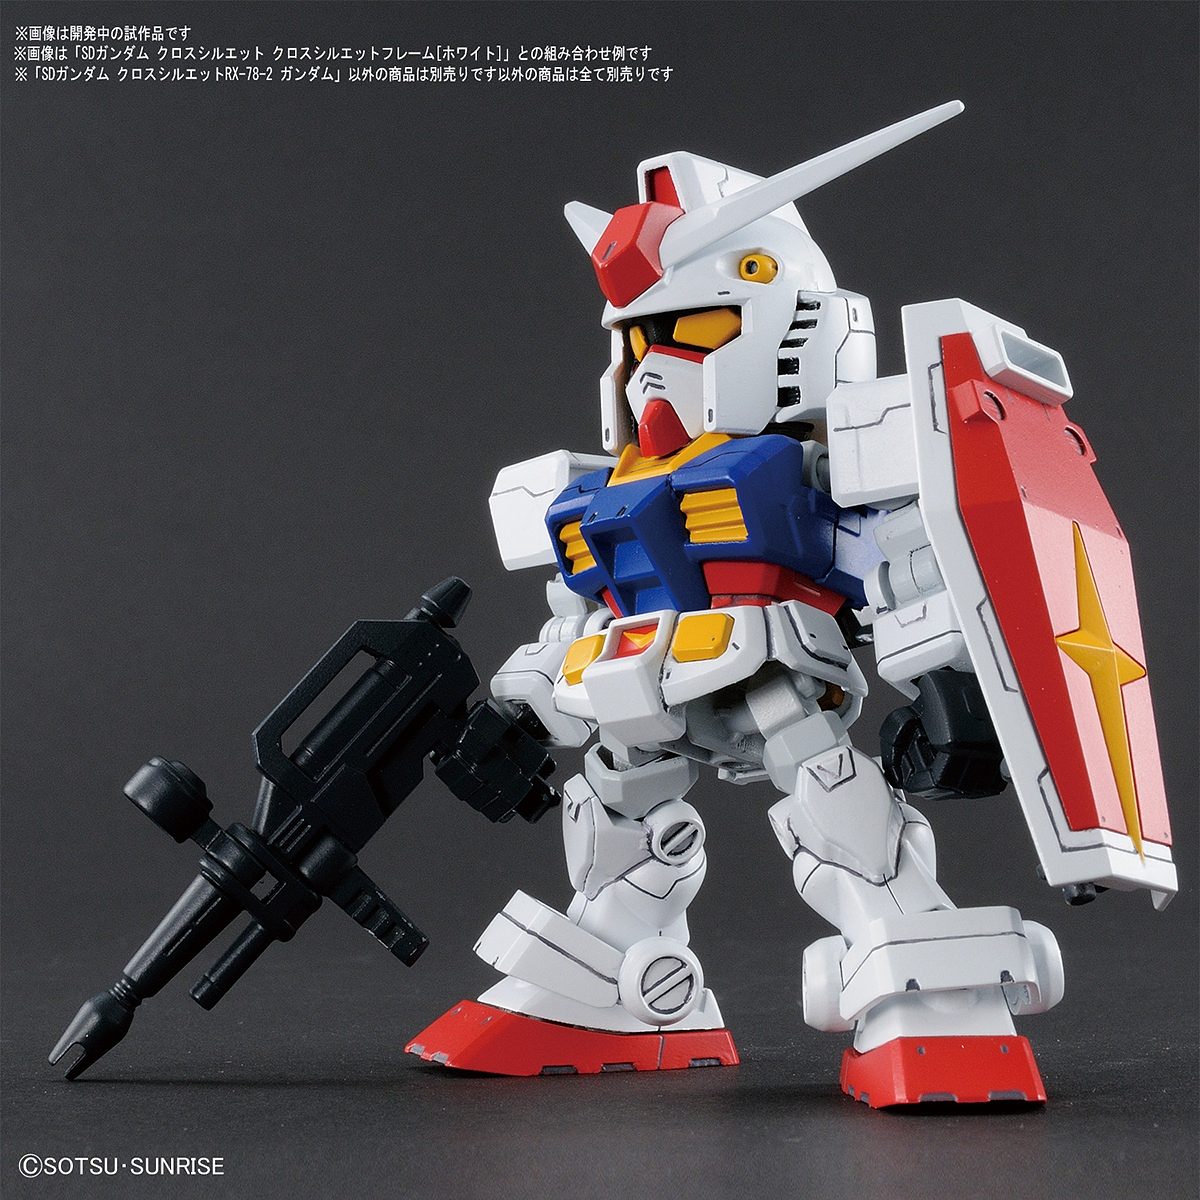 SD Gundam Cross Silhouette - RX-78-2 - gundam-store.dk